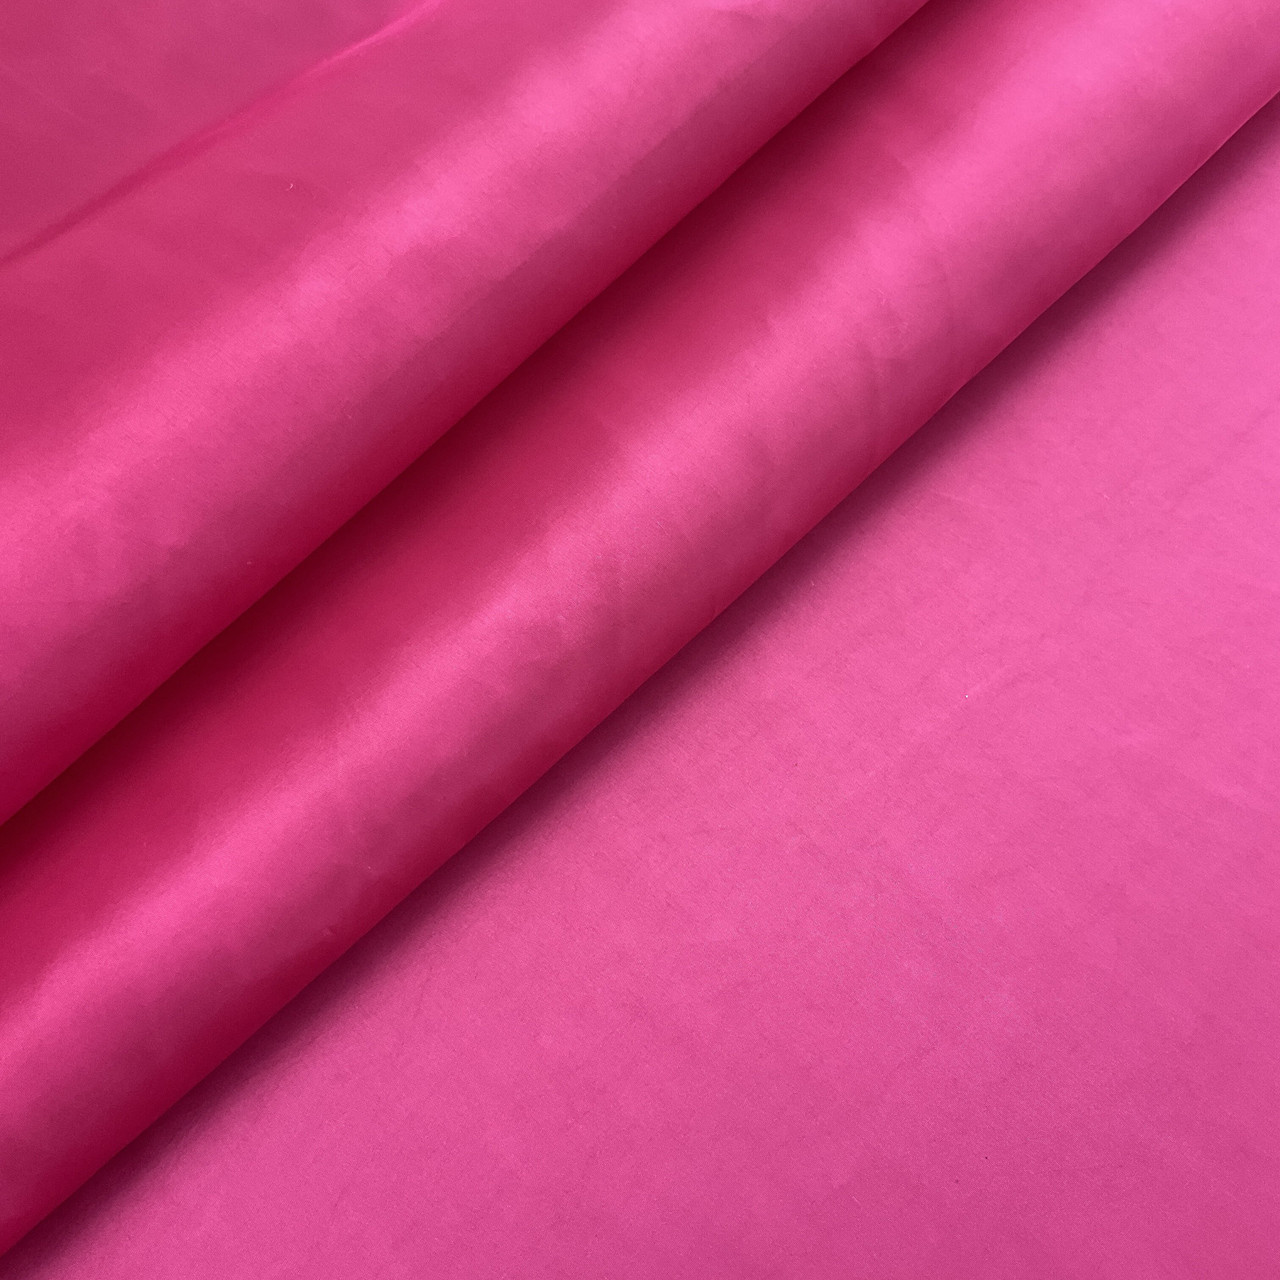 110 Nylon Taffeta Fuchsia | Very Lightweight Taffeta Fabric | Home Decor  Fabric | 110 Wide